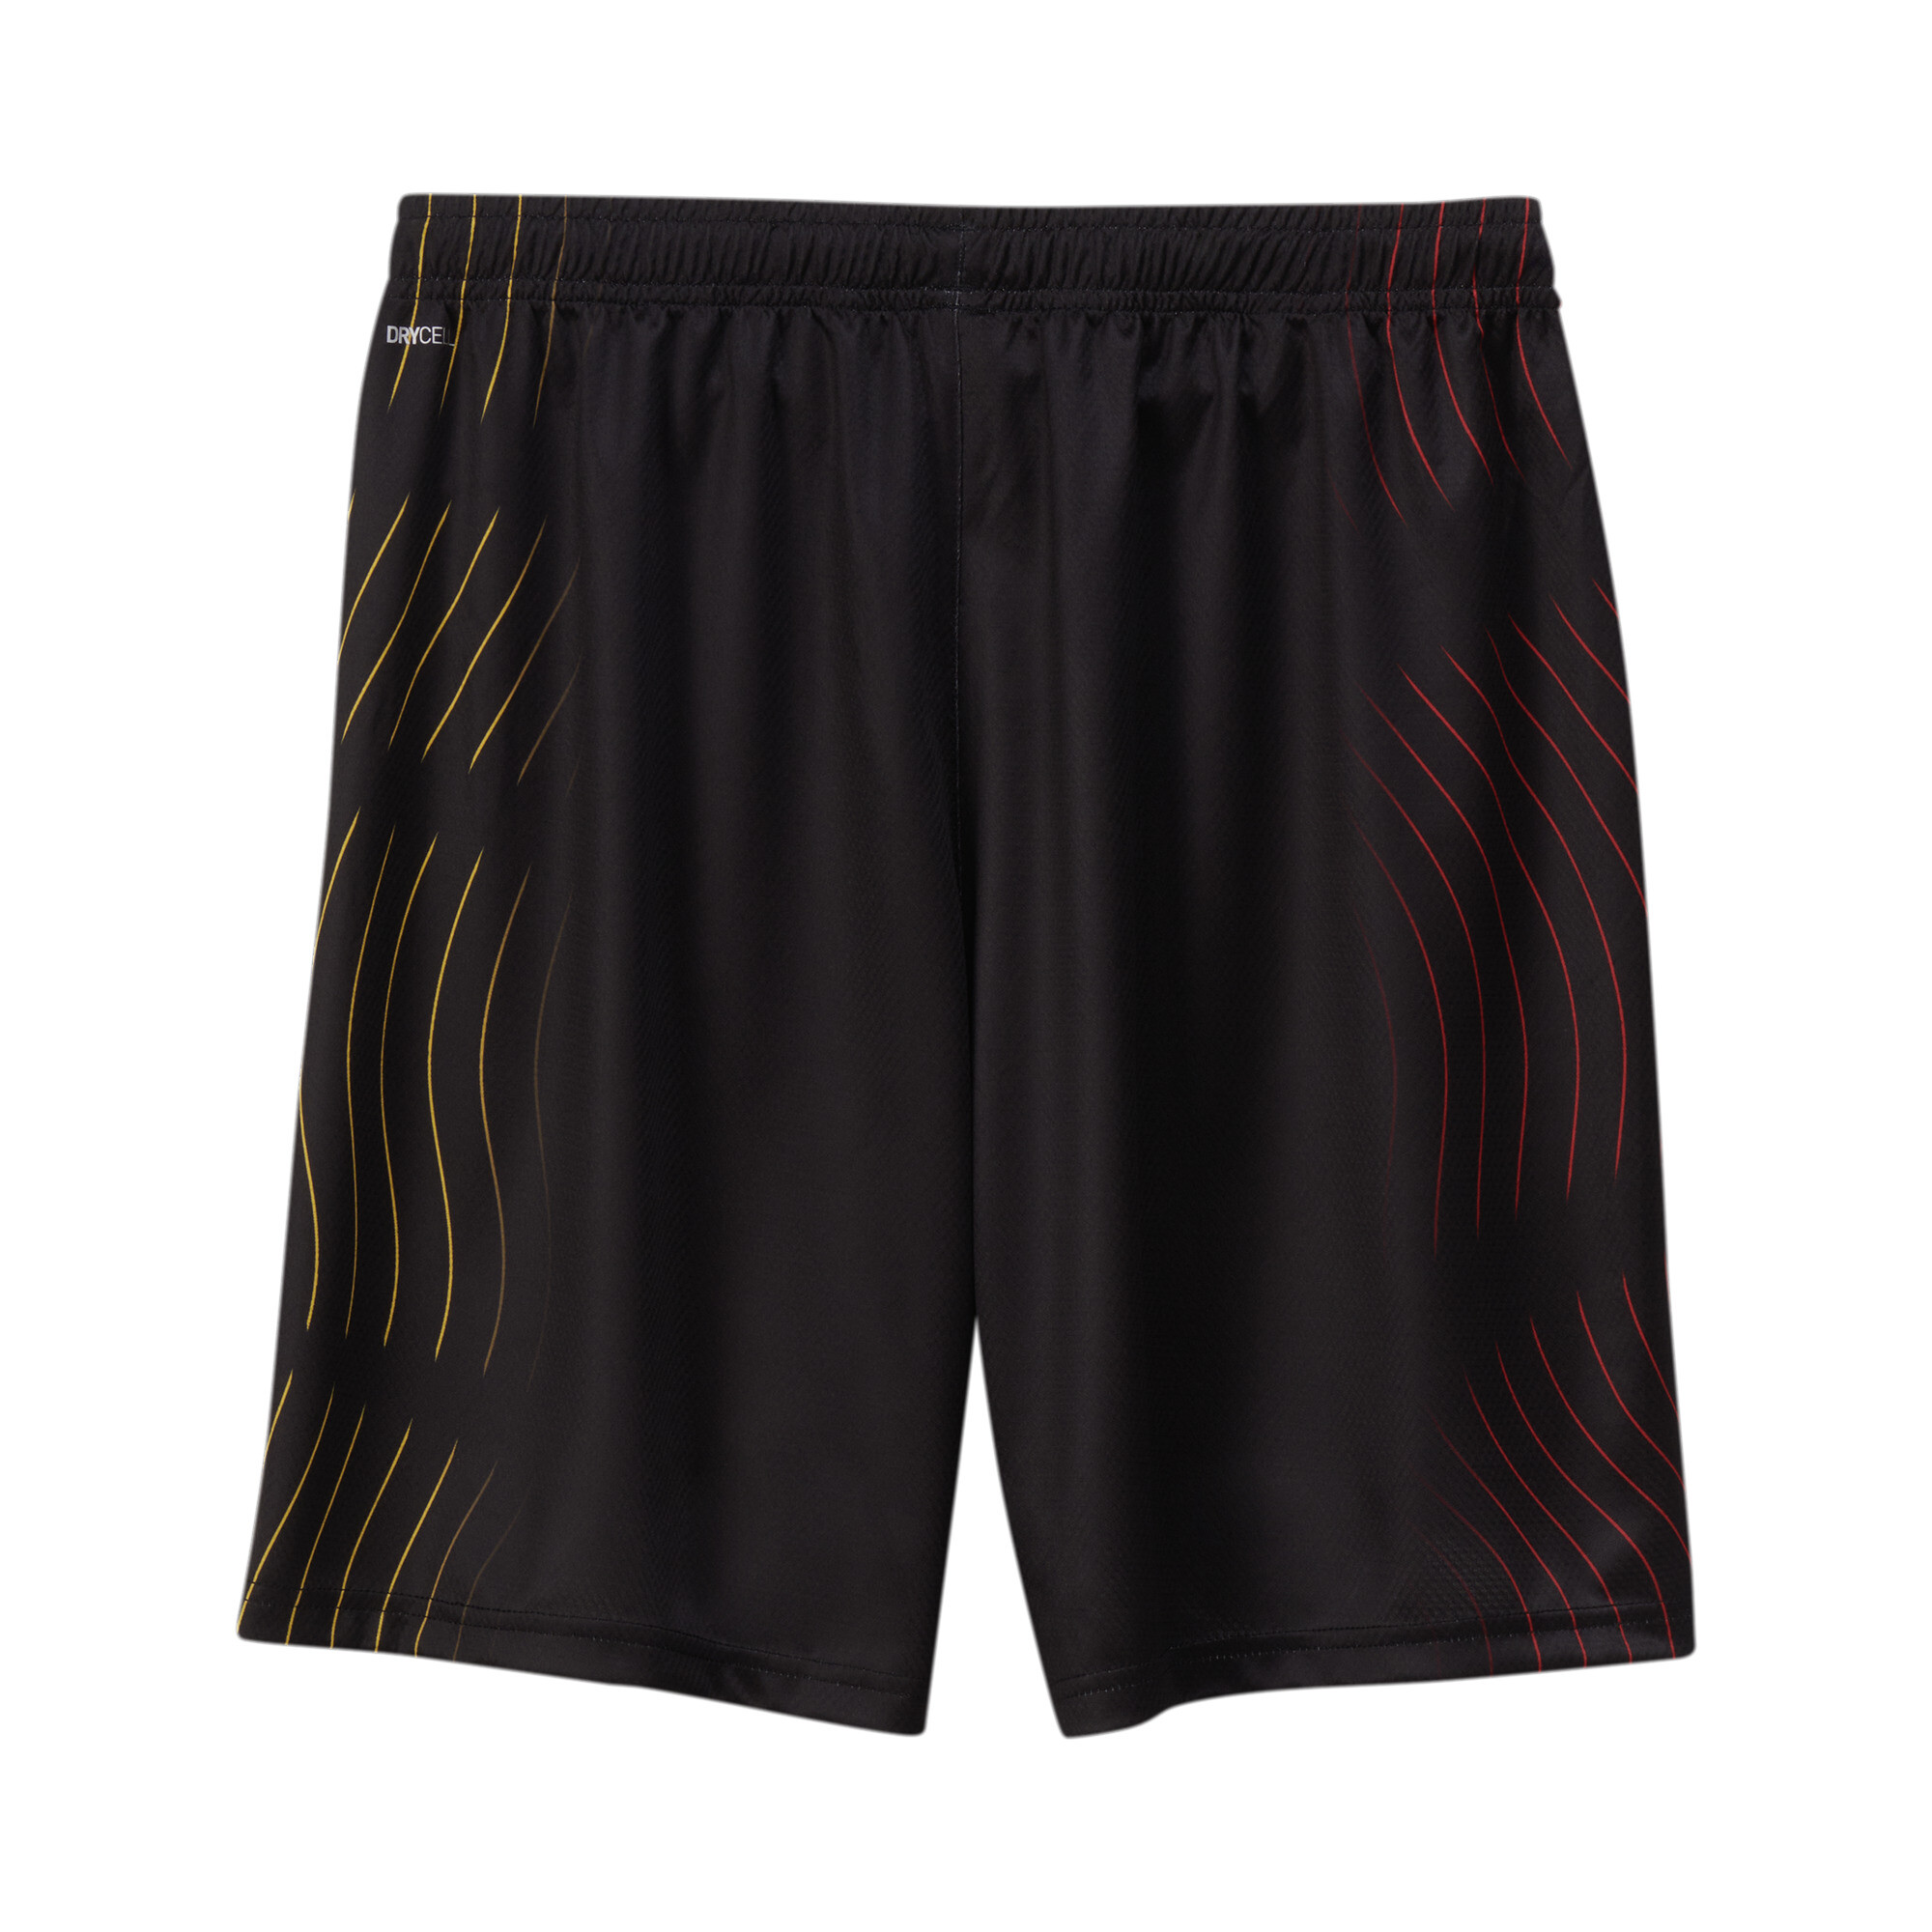 Men's Puma DHB's Handball Shorts, Black, Size S, Clothing